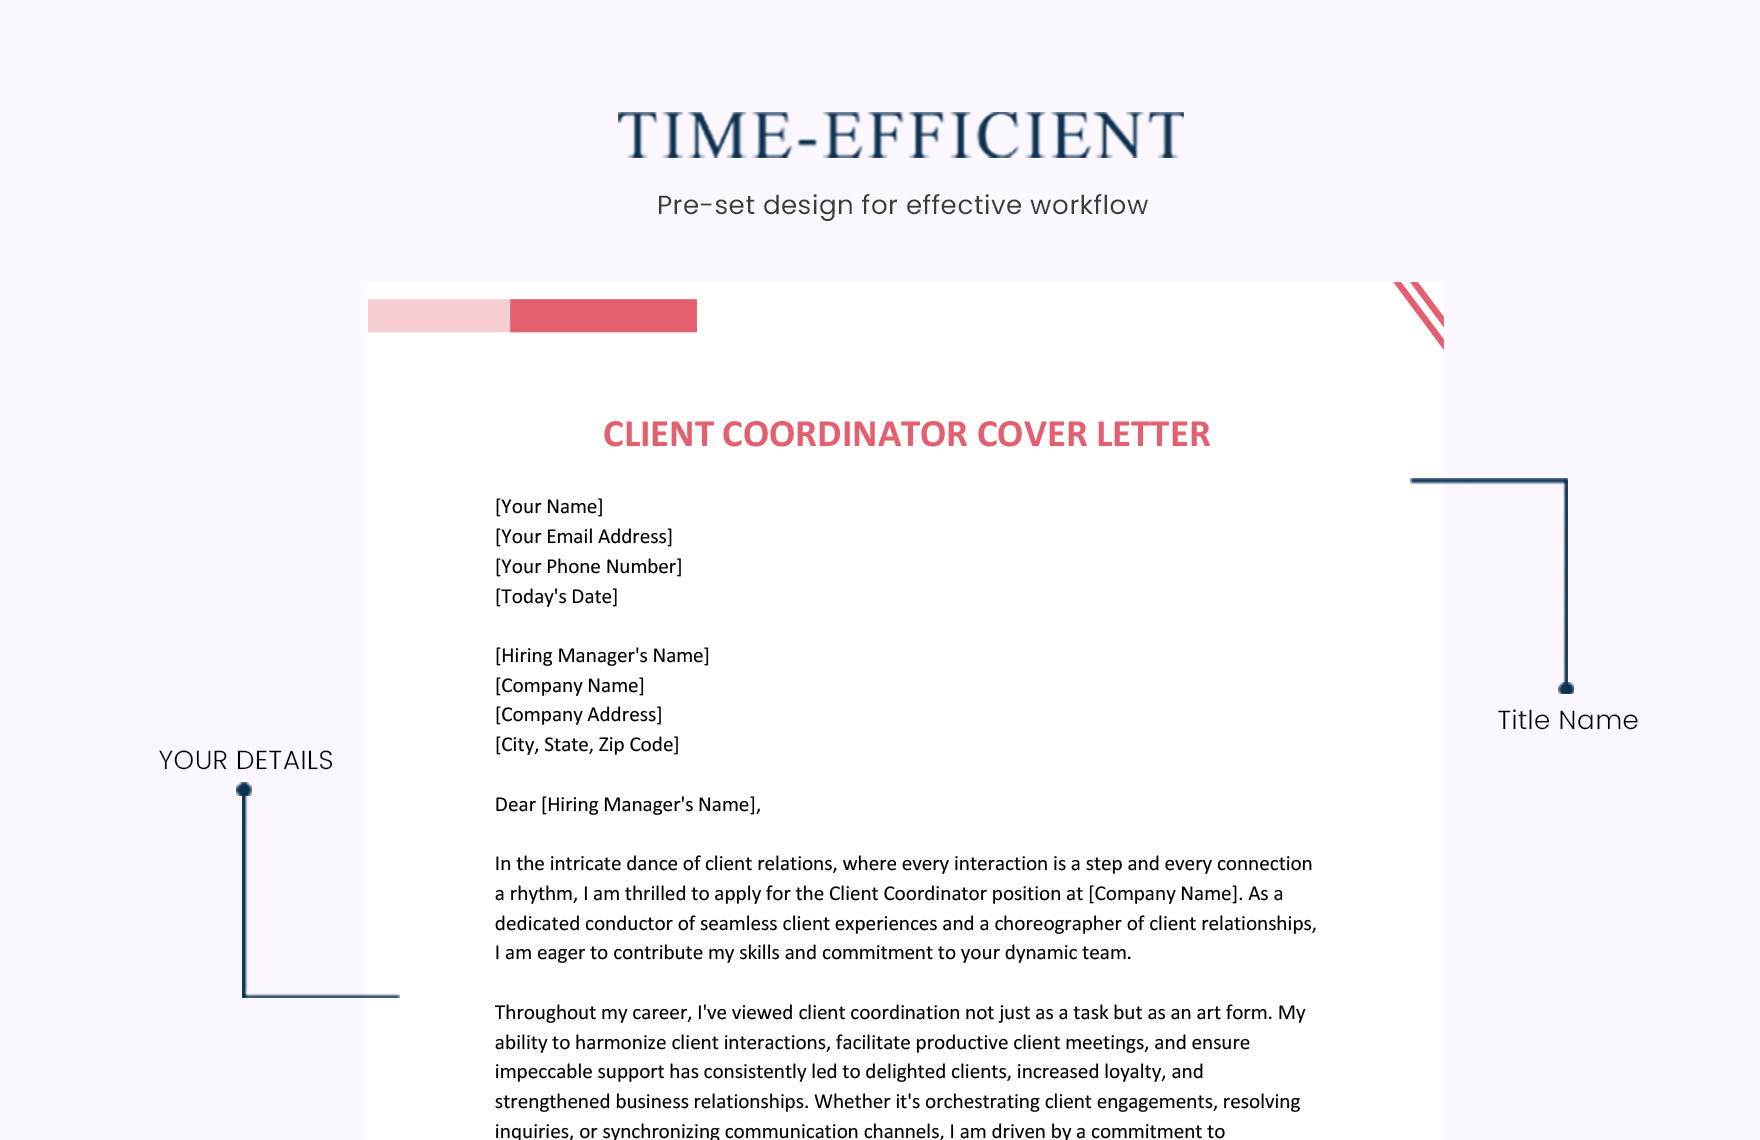 Client Coordinator Cover Letter